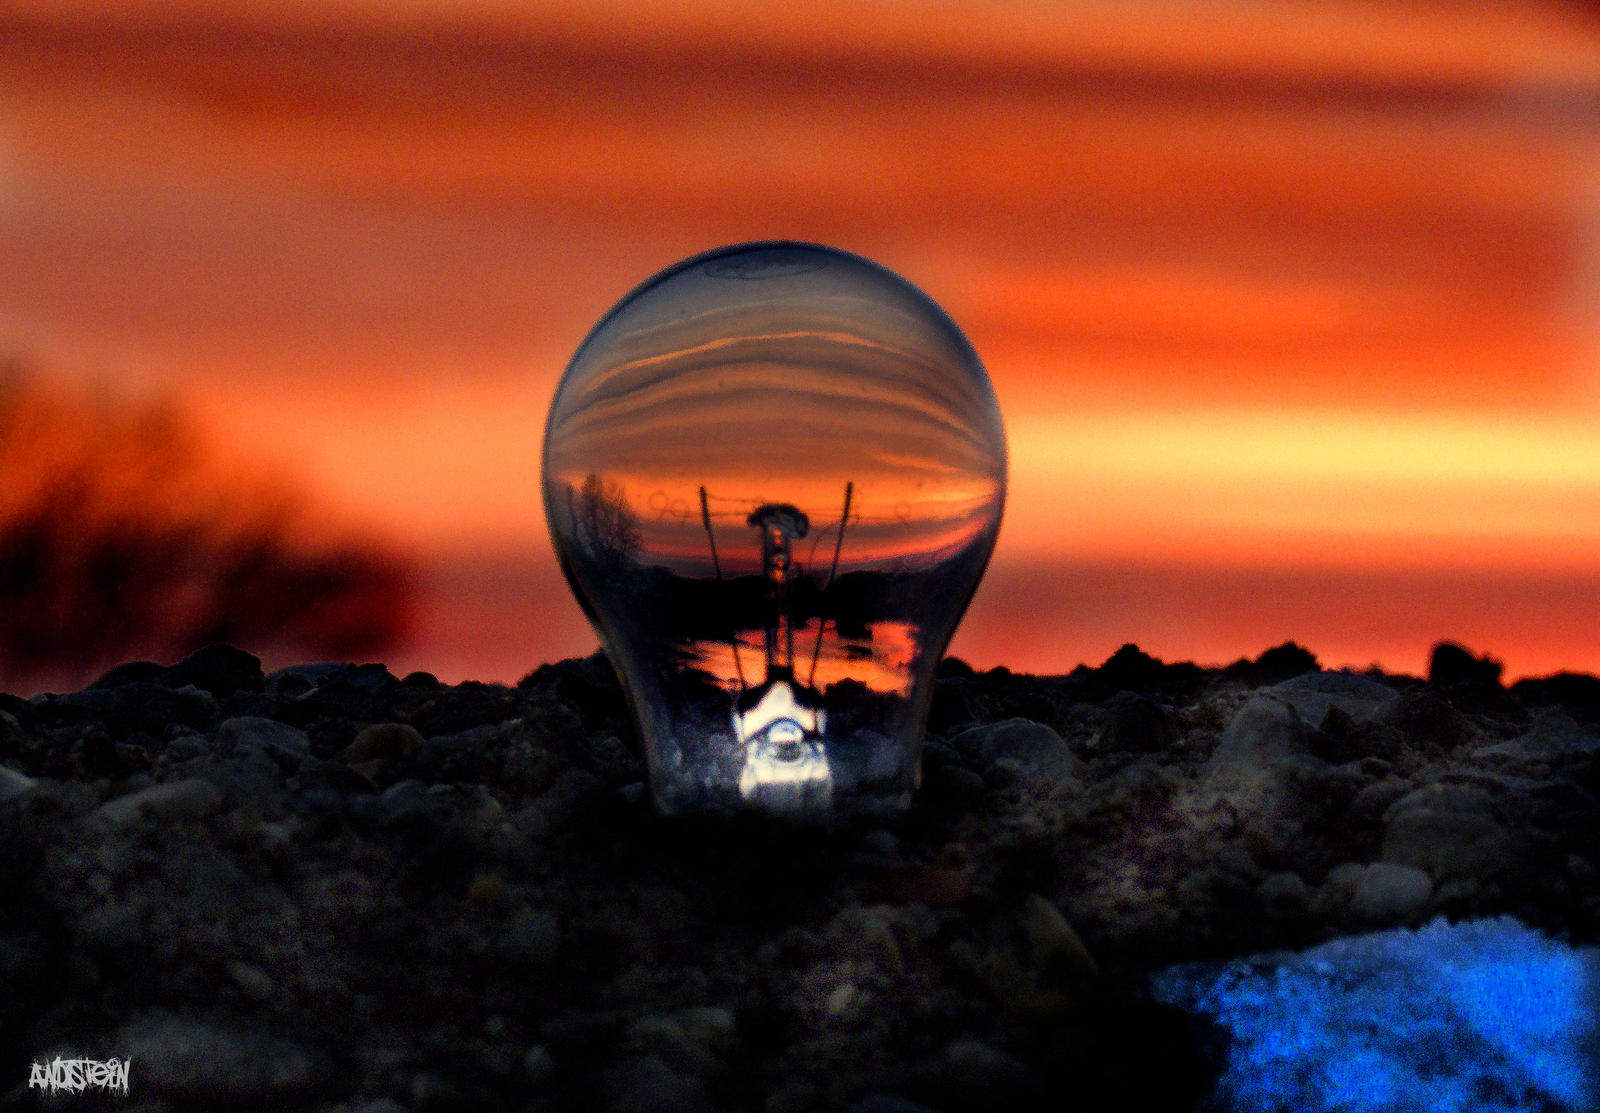 Light Bulb's sunset by Andstein00 on DeviantArt